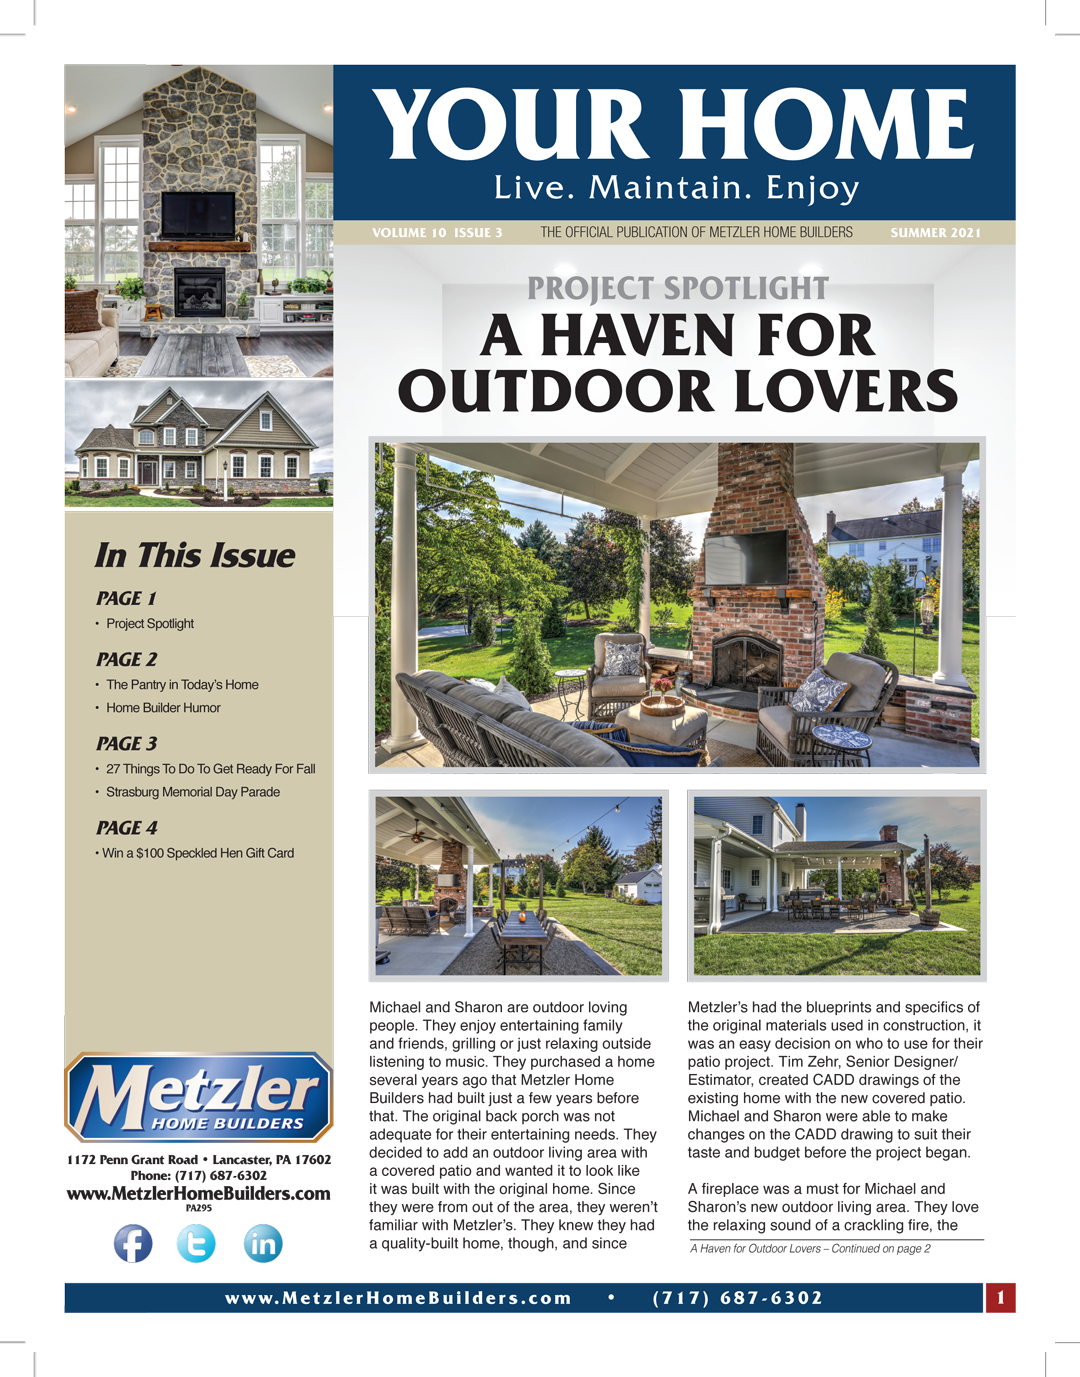 Metzler 'Your Home' Newsletter PDF cover for Summer 2021